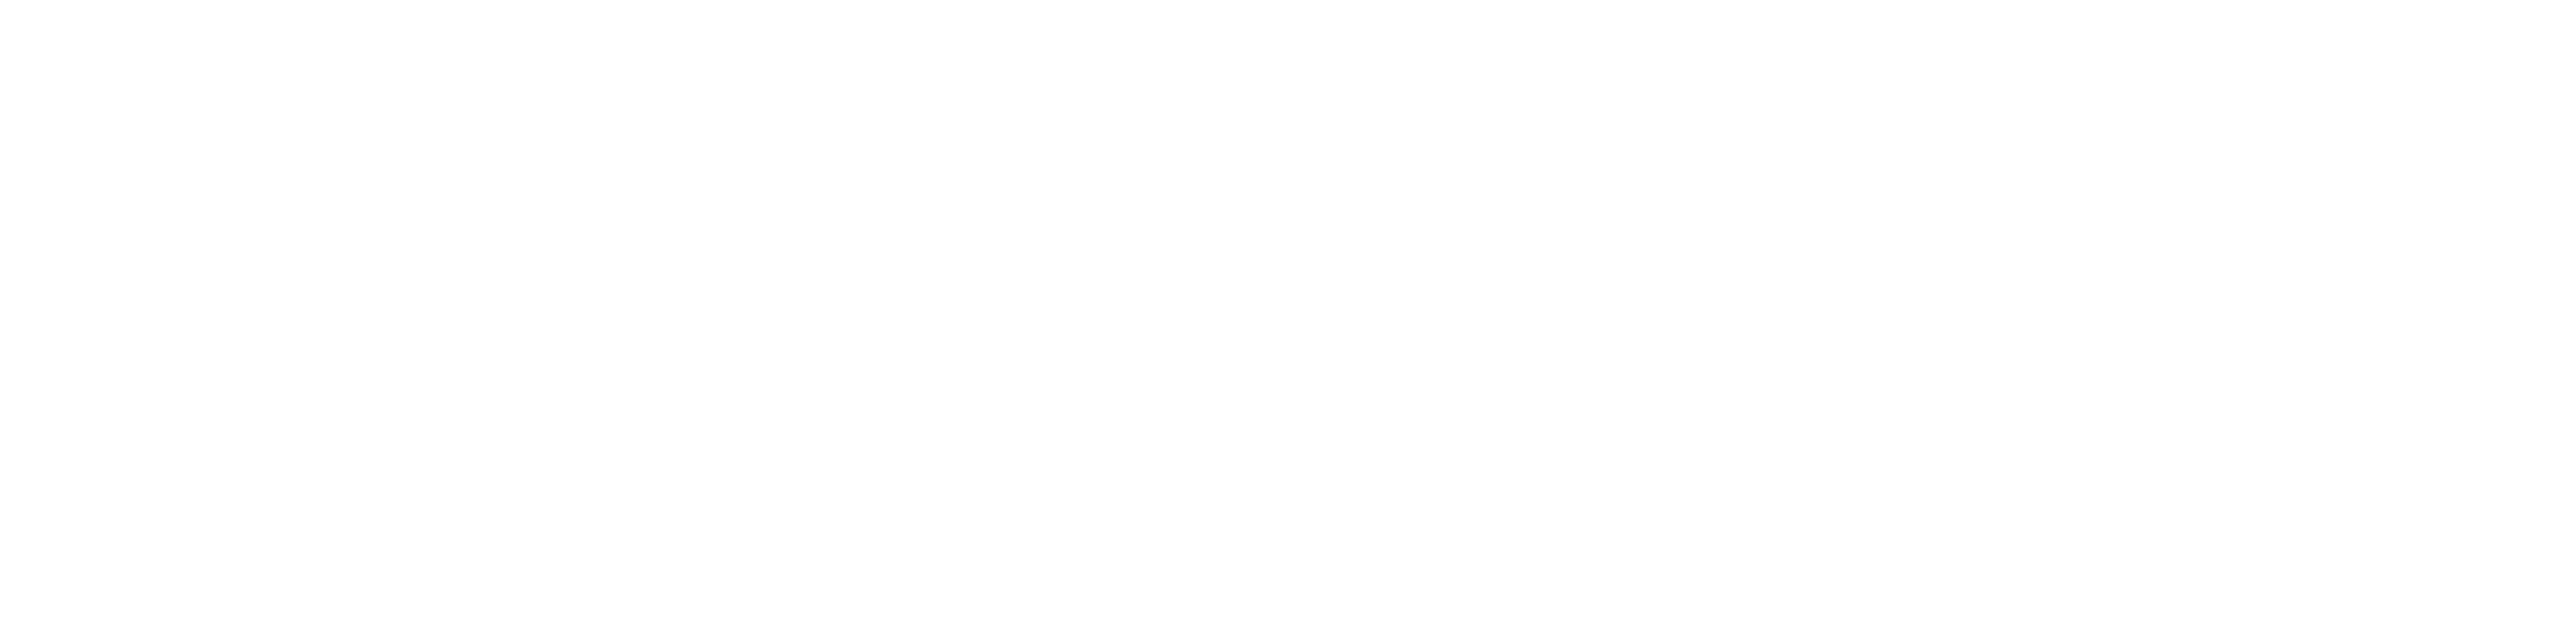 Fabuwood Logo - Ready To Go Cabinets & Bathroom